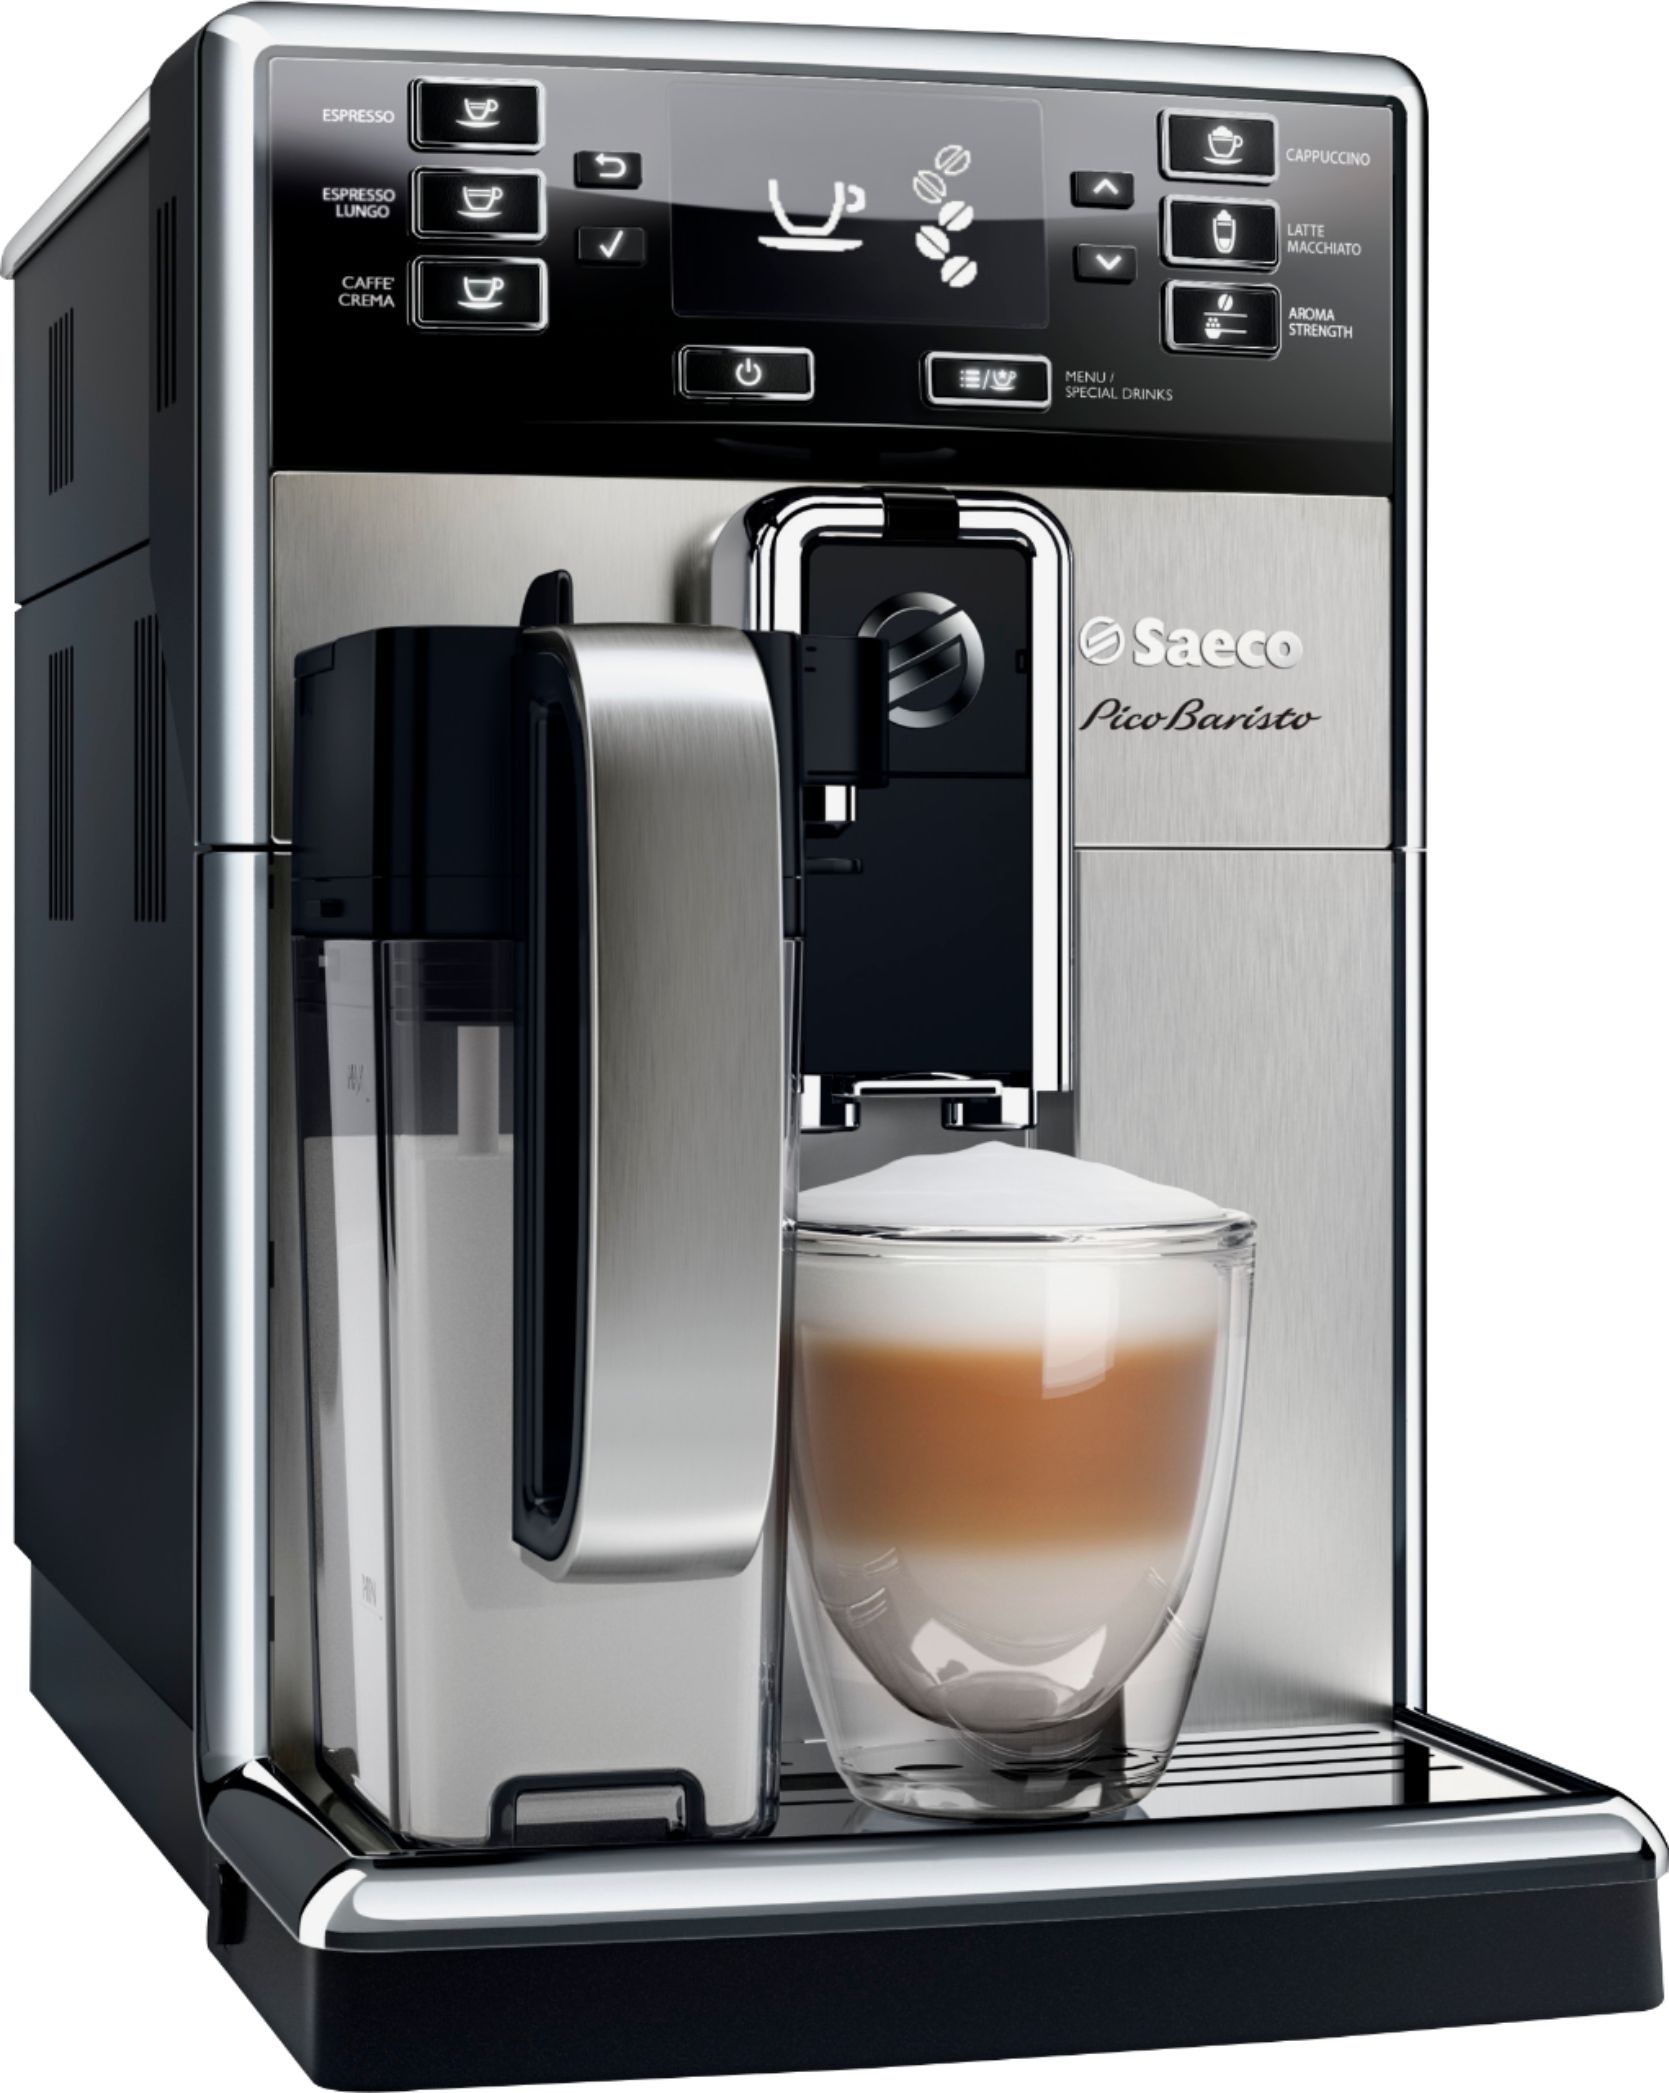 PicoBaristo Milk Carafe Automatic Espresso Machine, Stainless Steel Black/Silver HD8927/47 - Best Buy